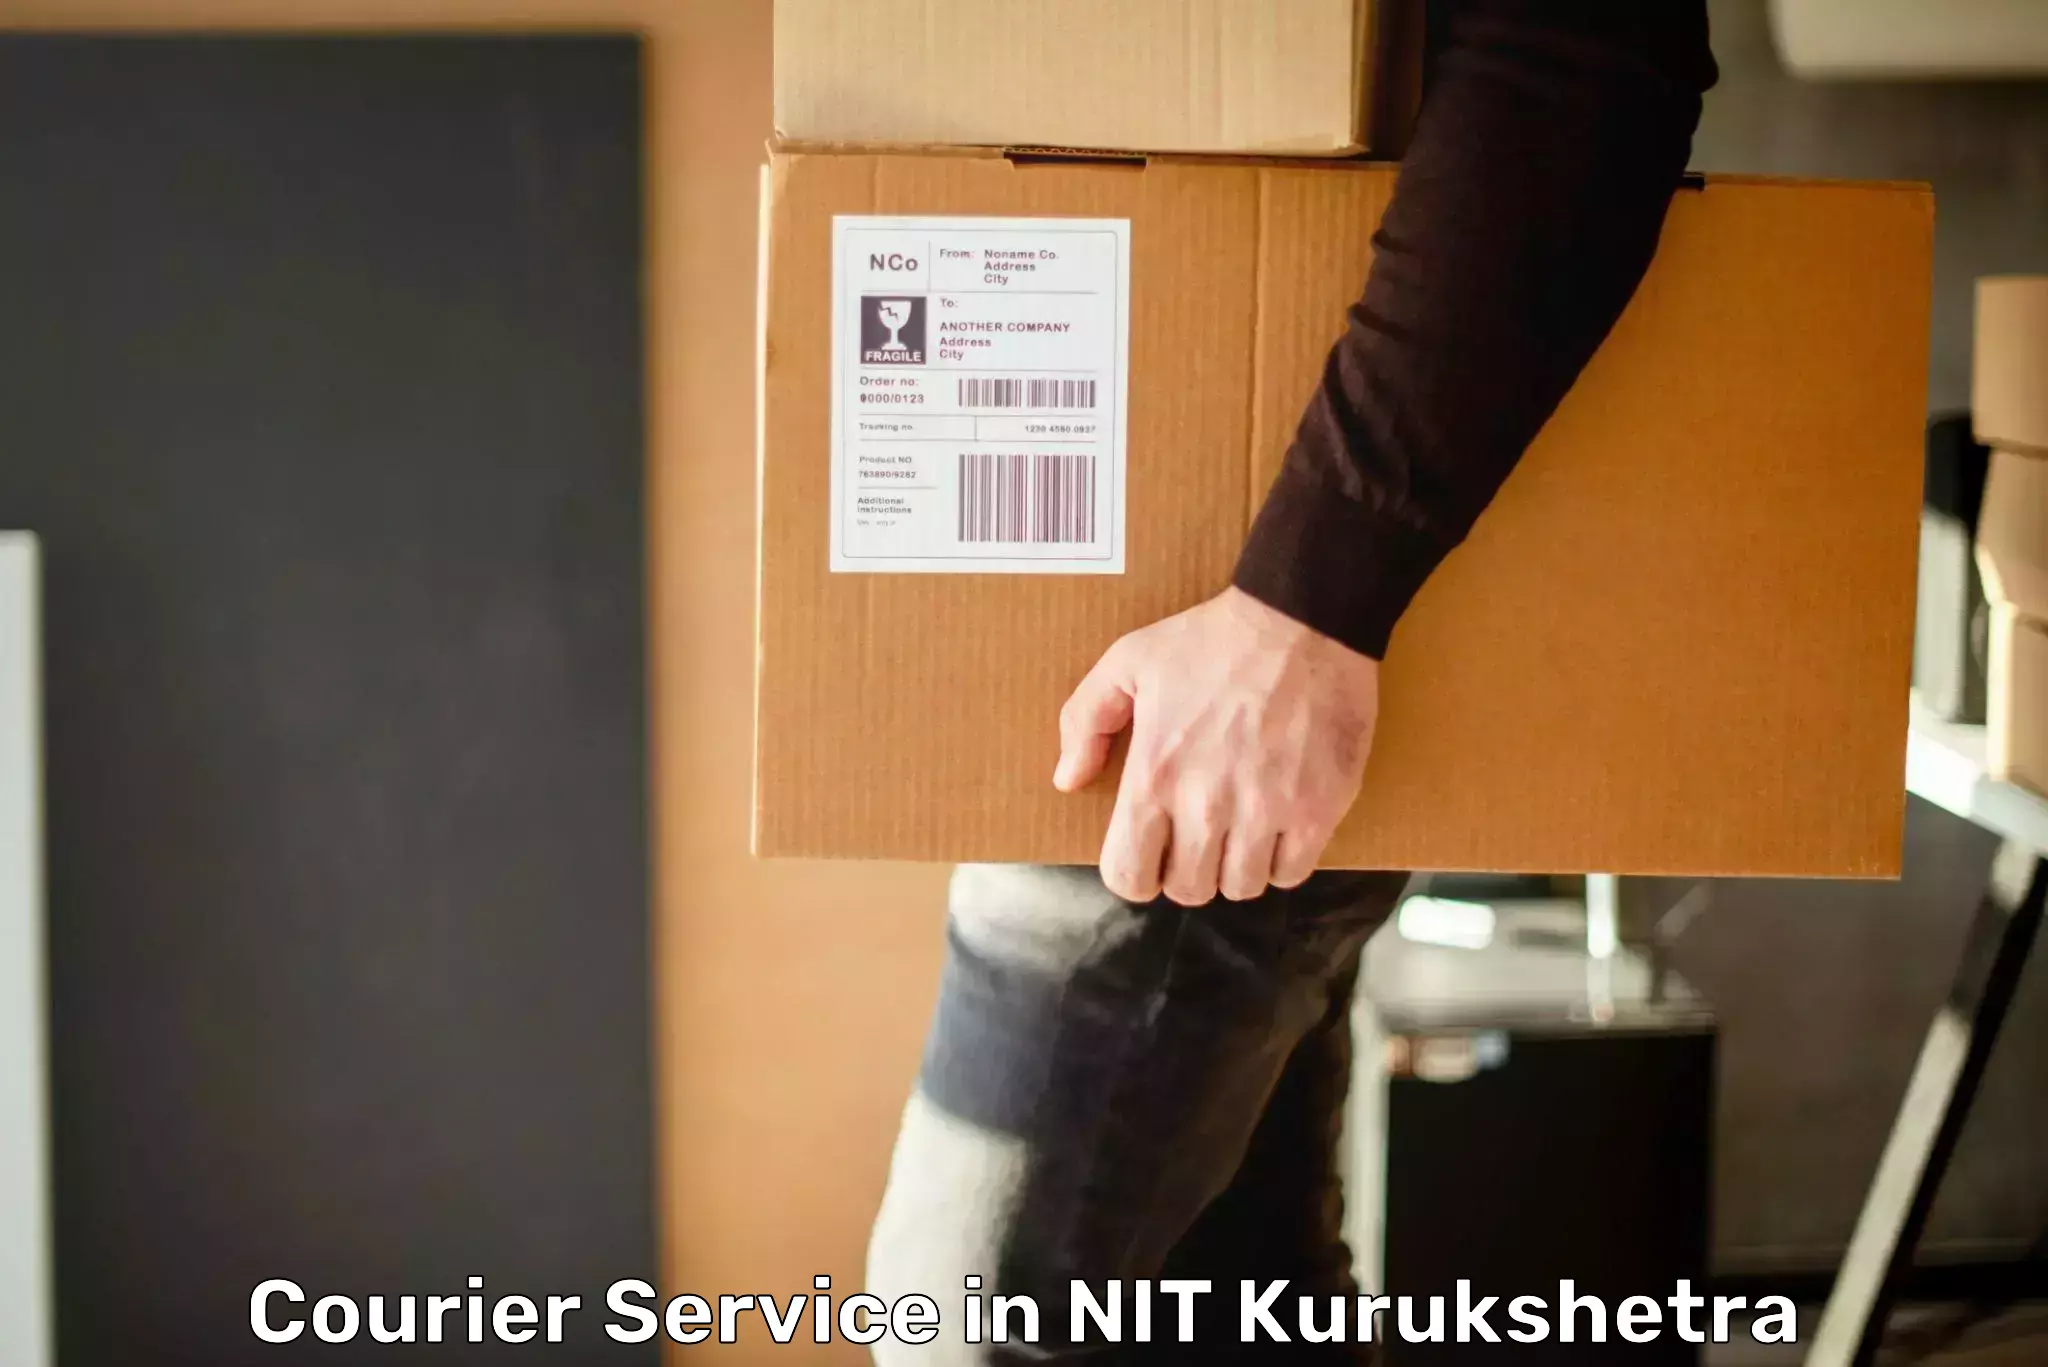 Courier service comparison in NIT Kurukshetra